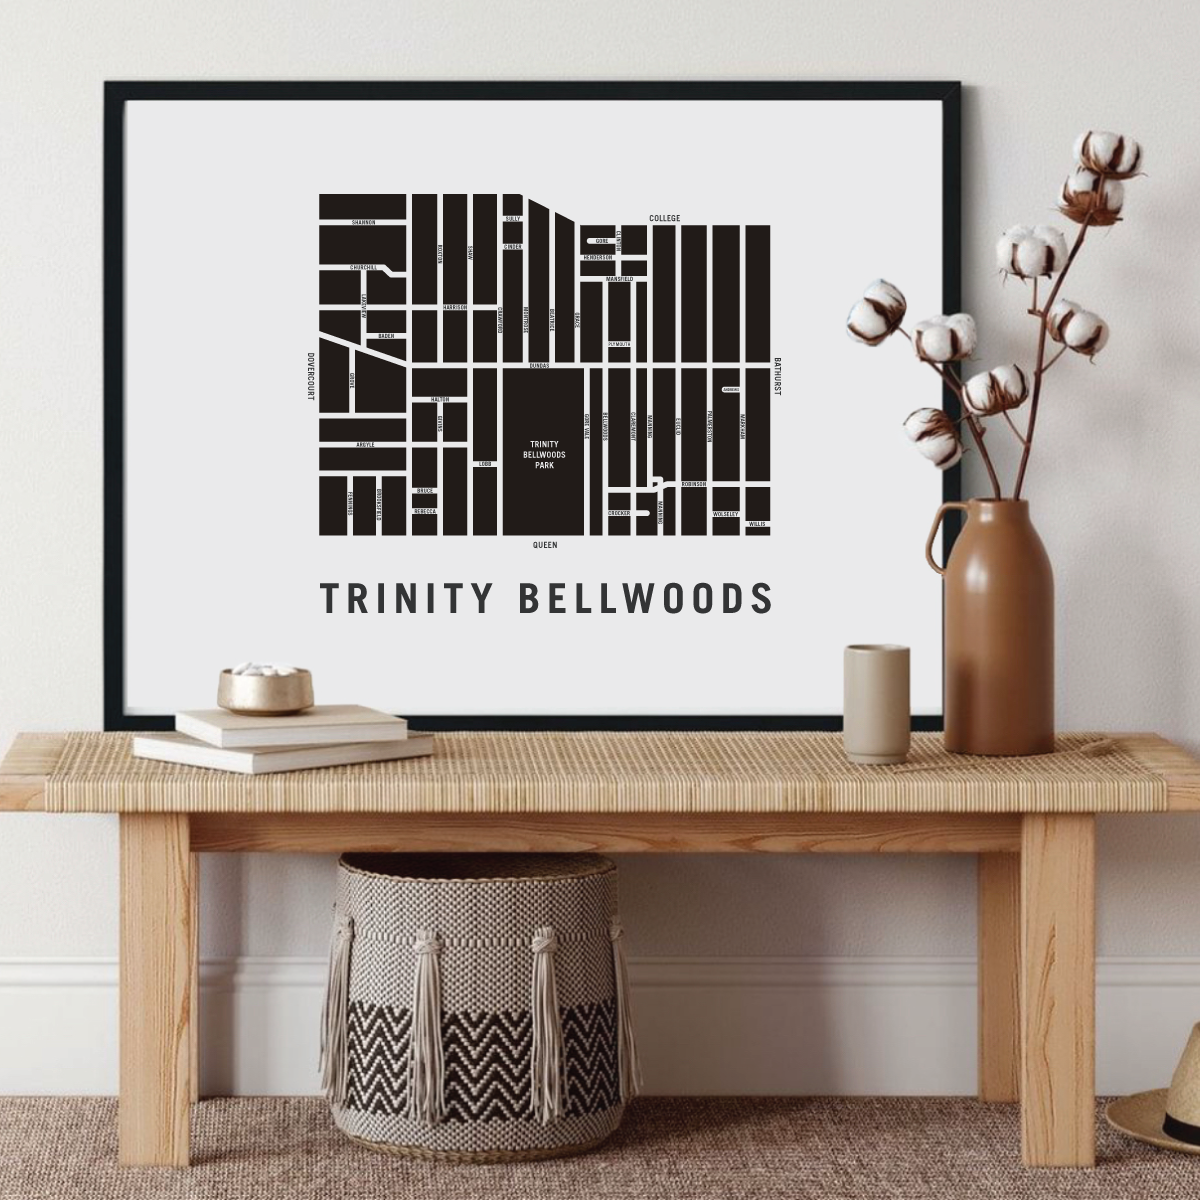 Trinity Bellwoods Map, Toronto